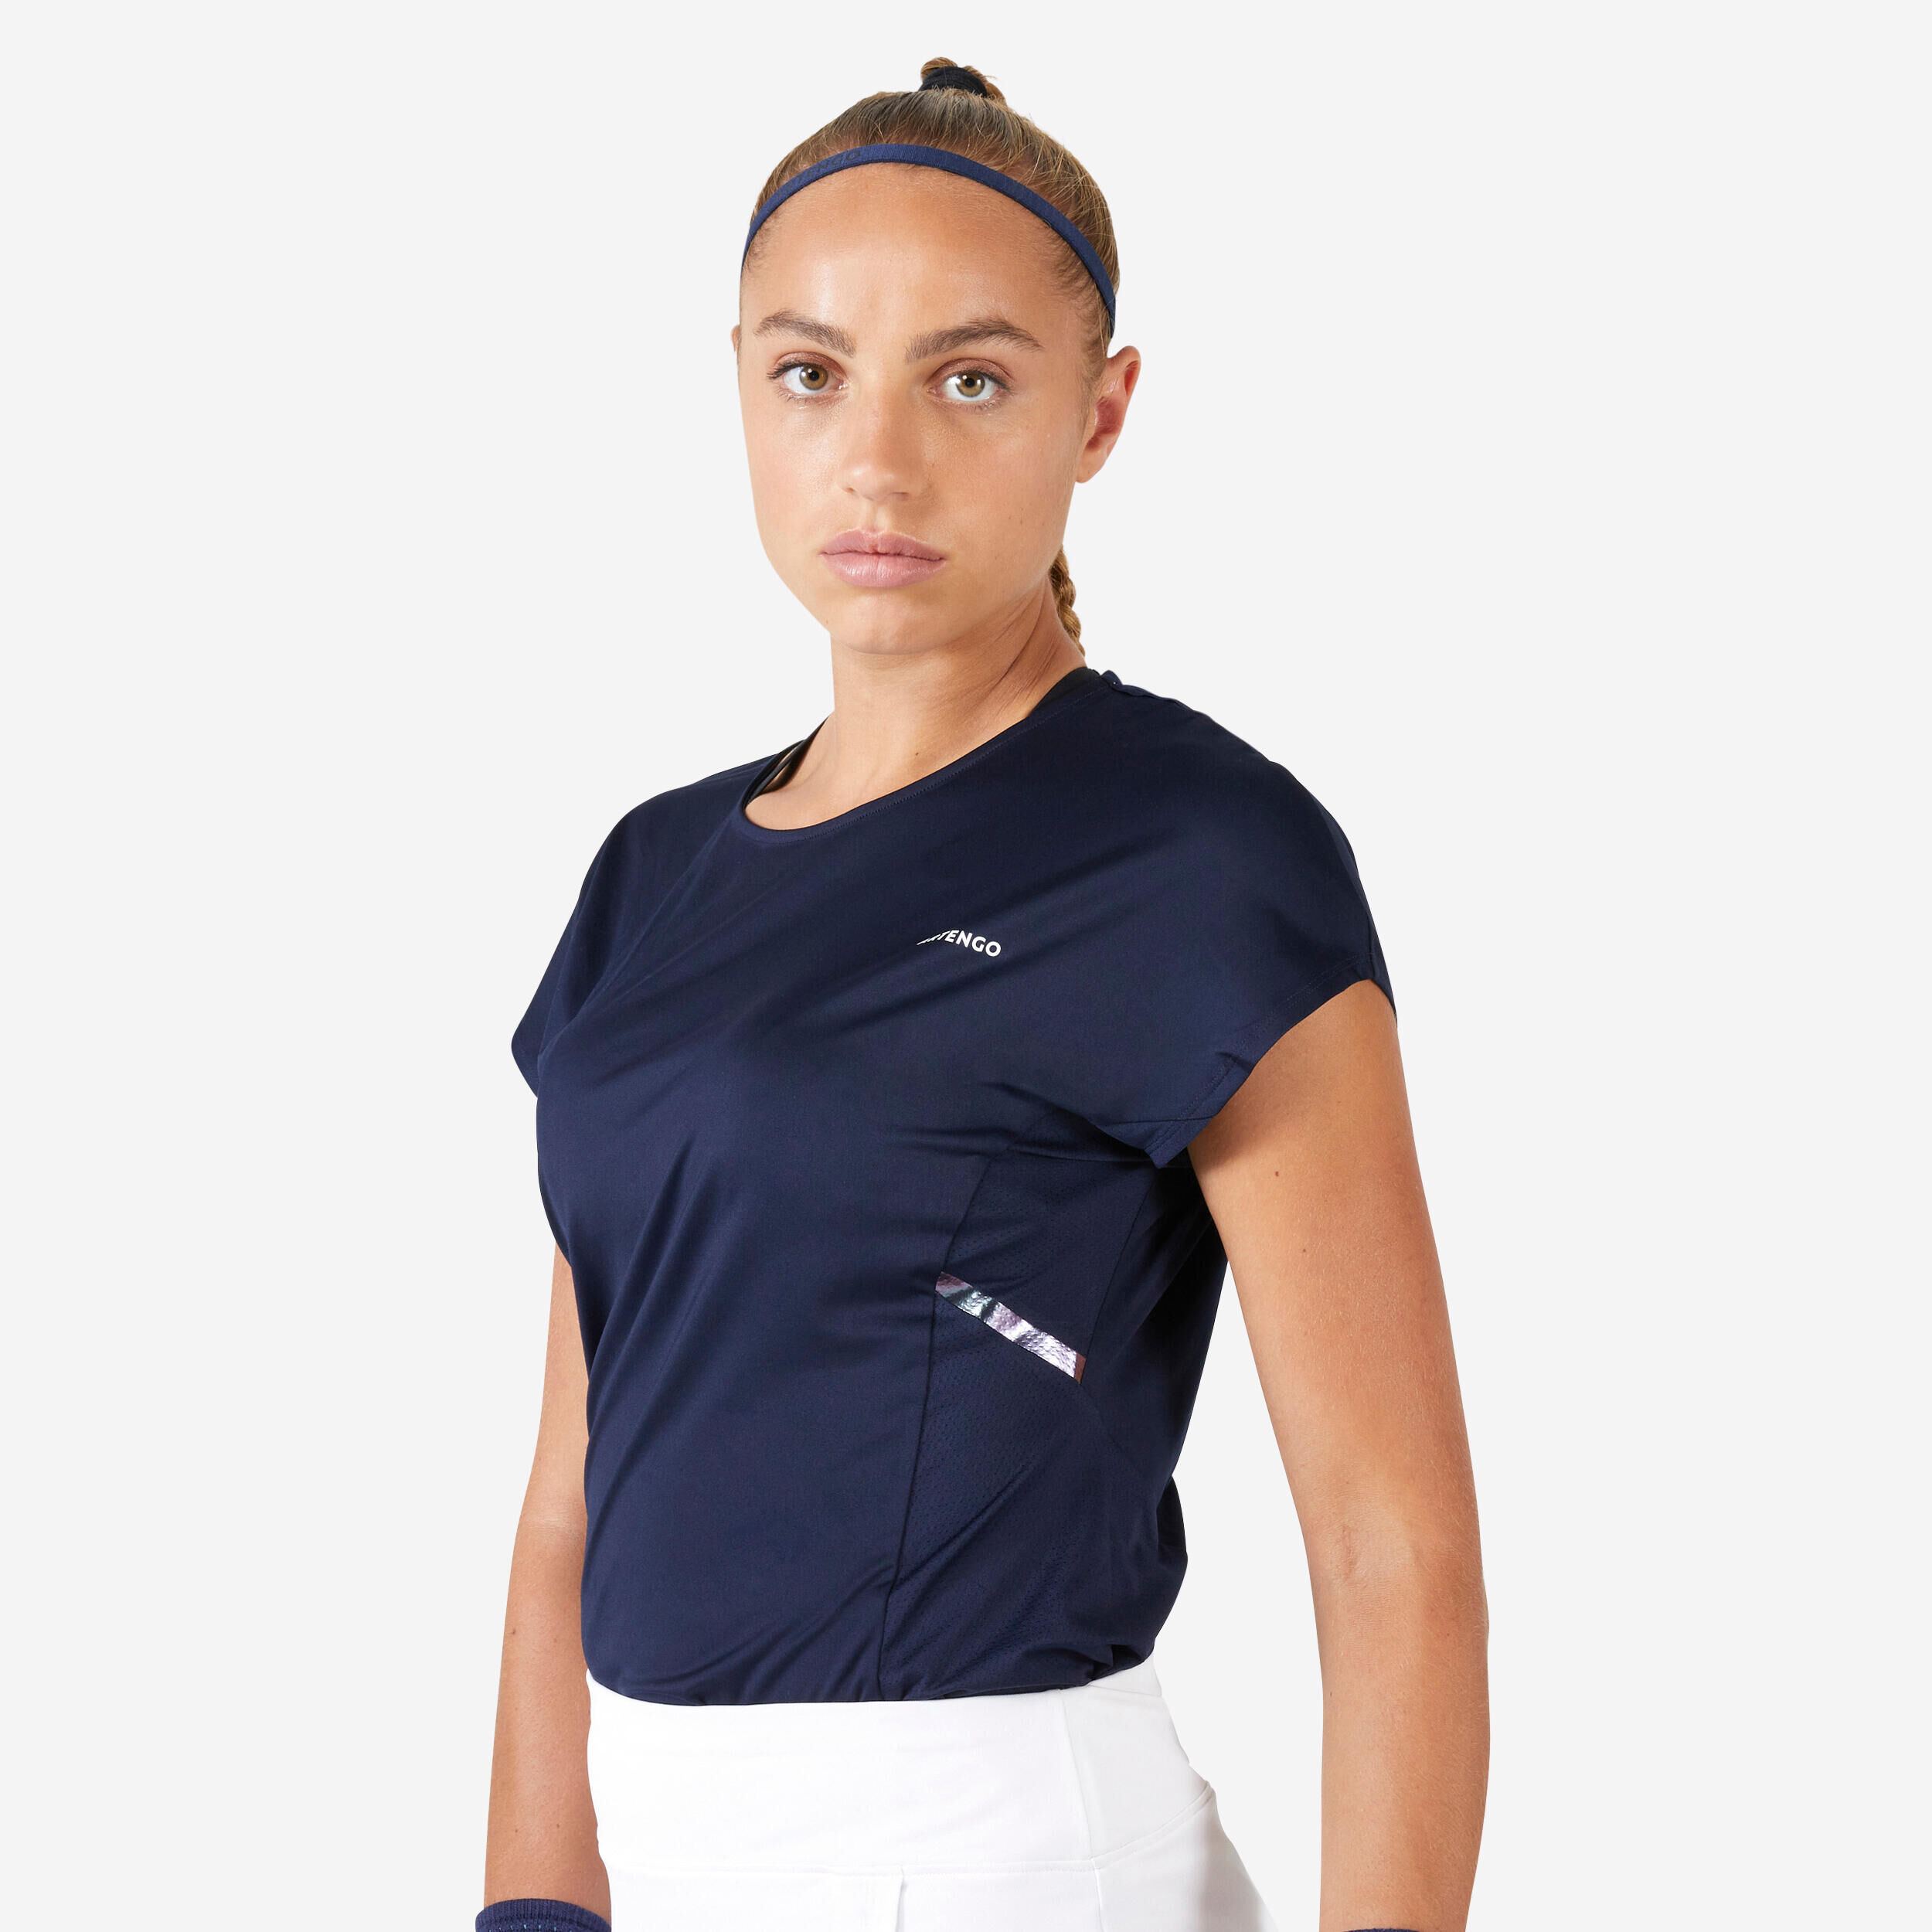 ARTENGO Women's Dry Crew Neck Soft Tennis T-Shirt Dry 500 - Blue/Black